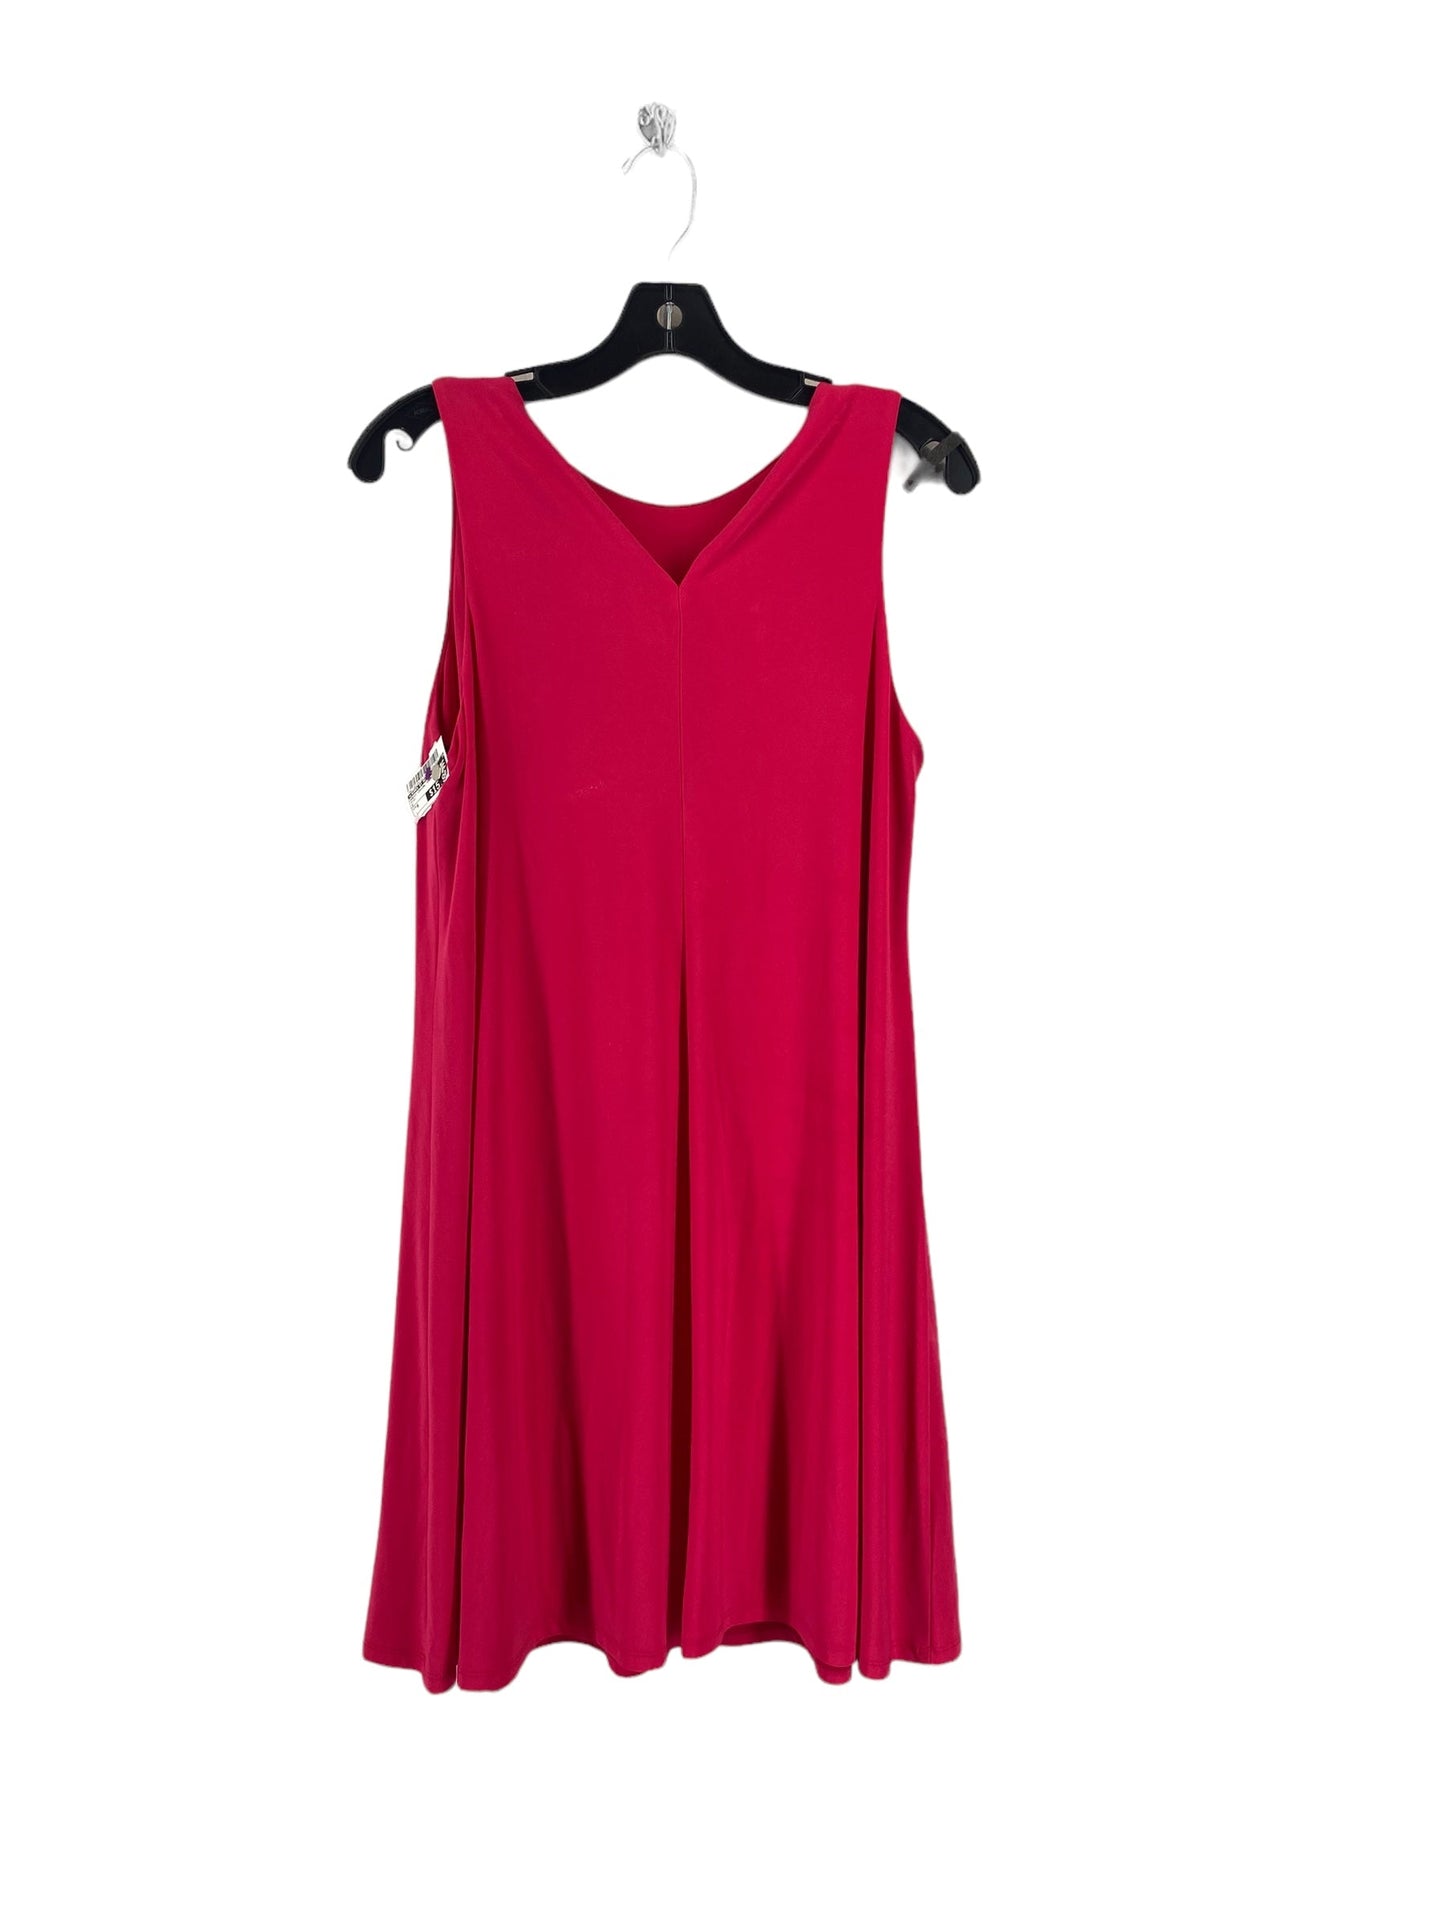 Pink Dress Casual Short Lauren By Ralph Lauren, Size 8